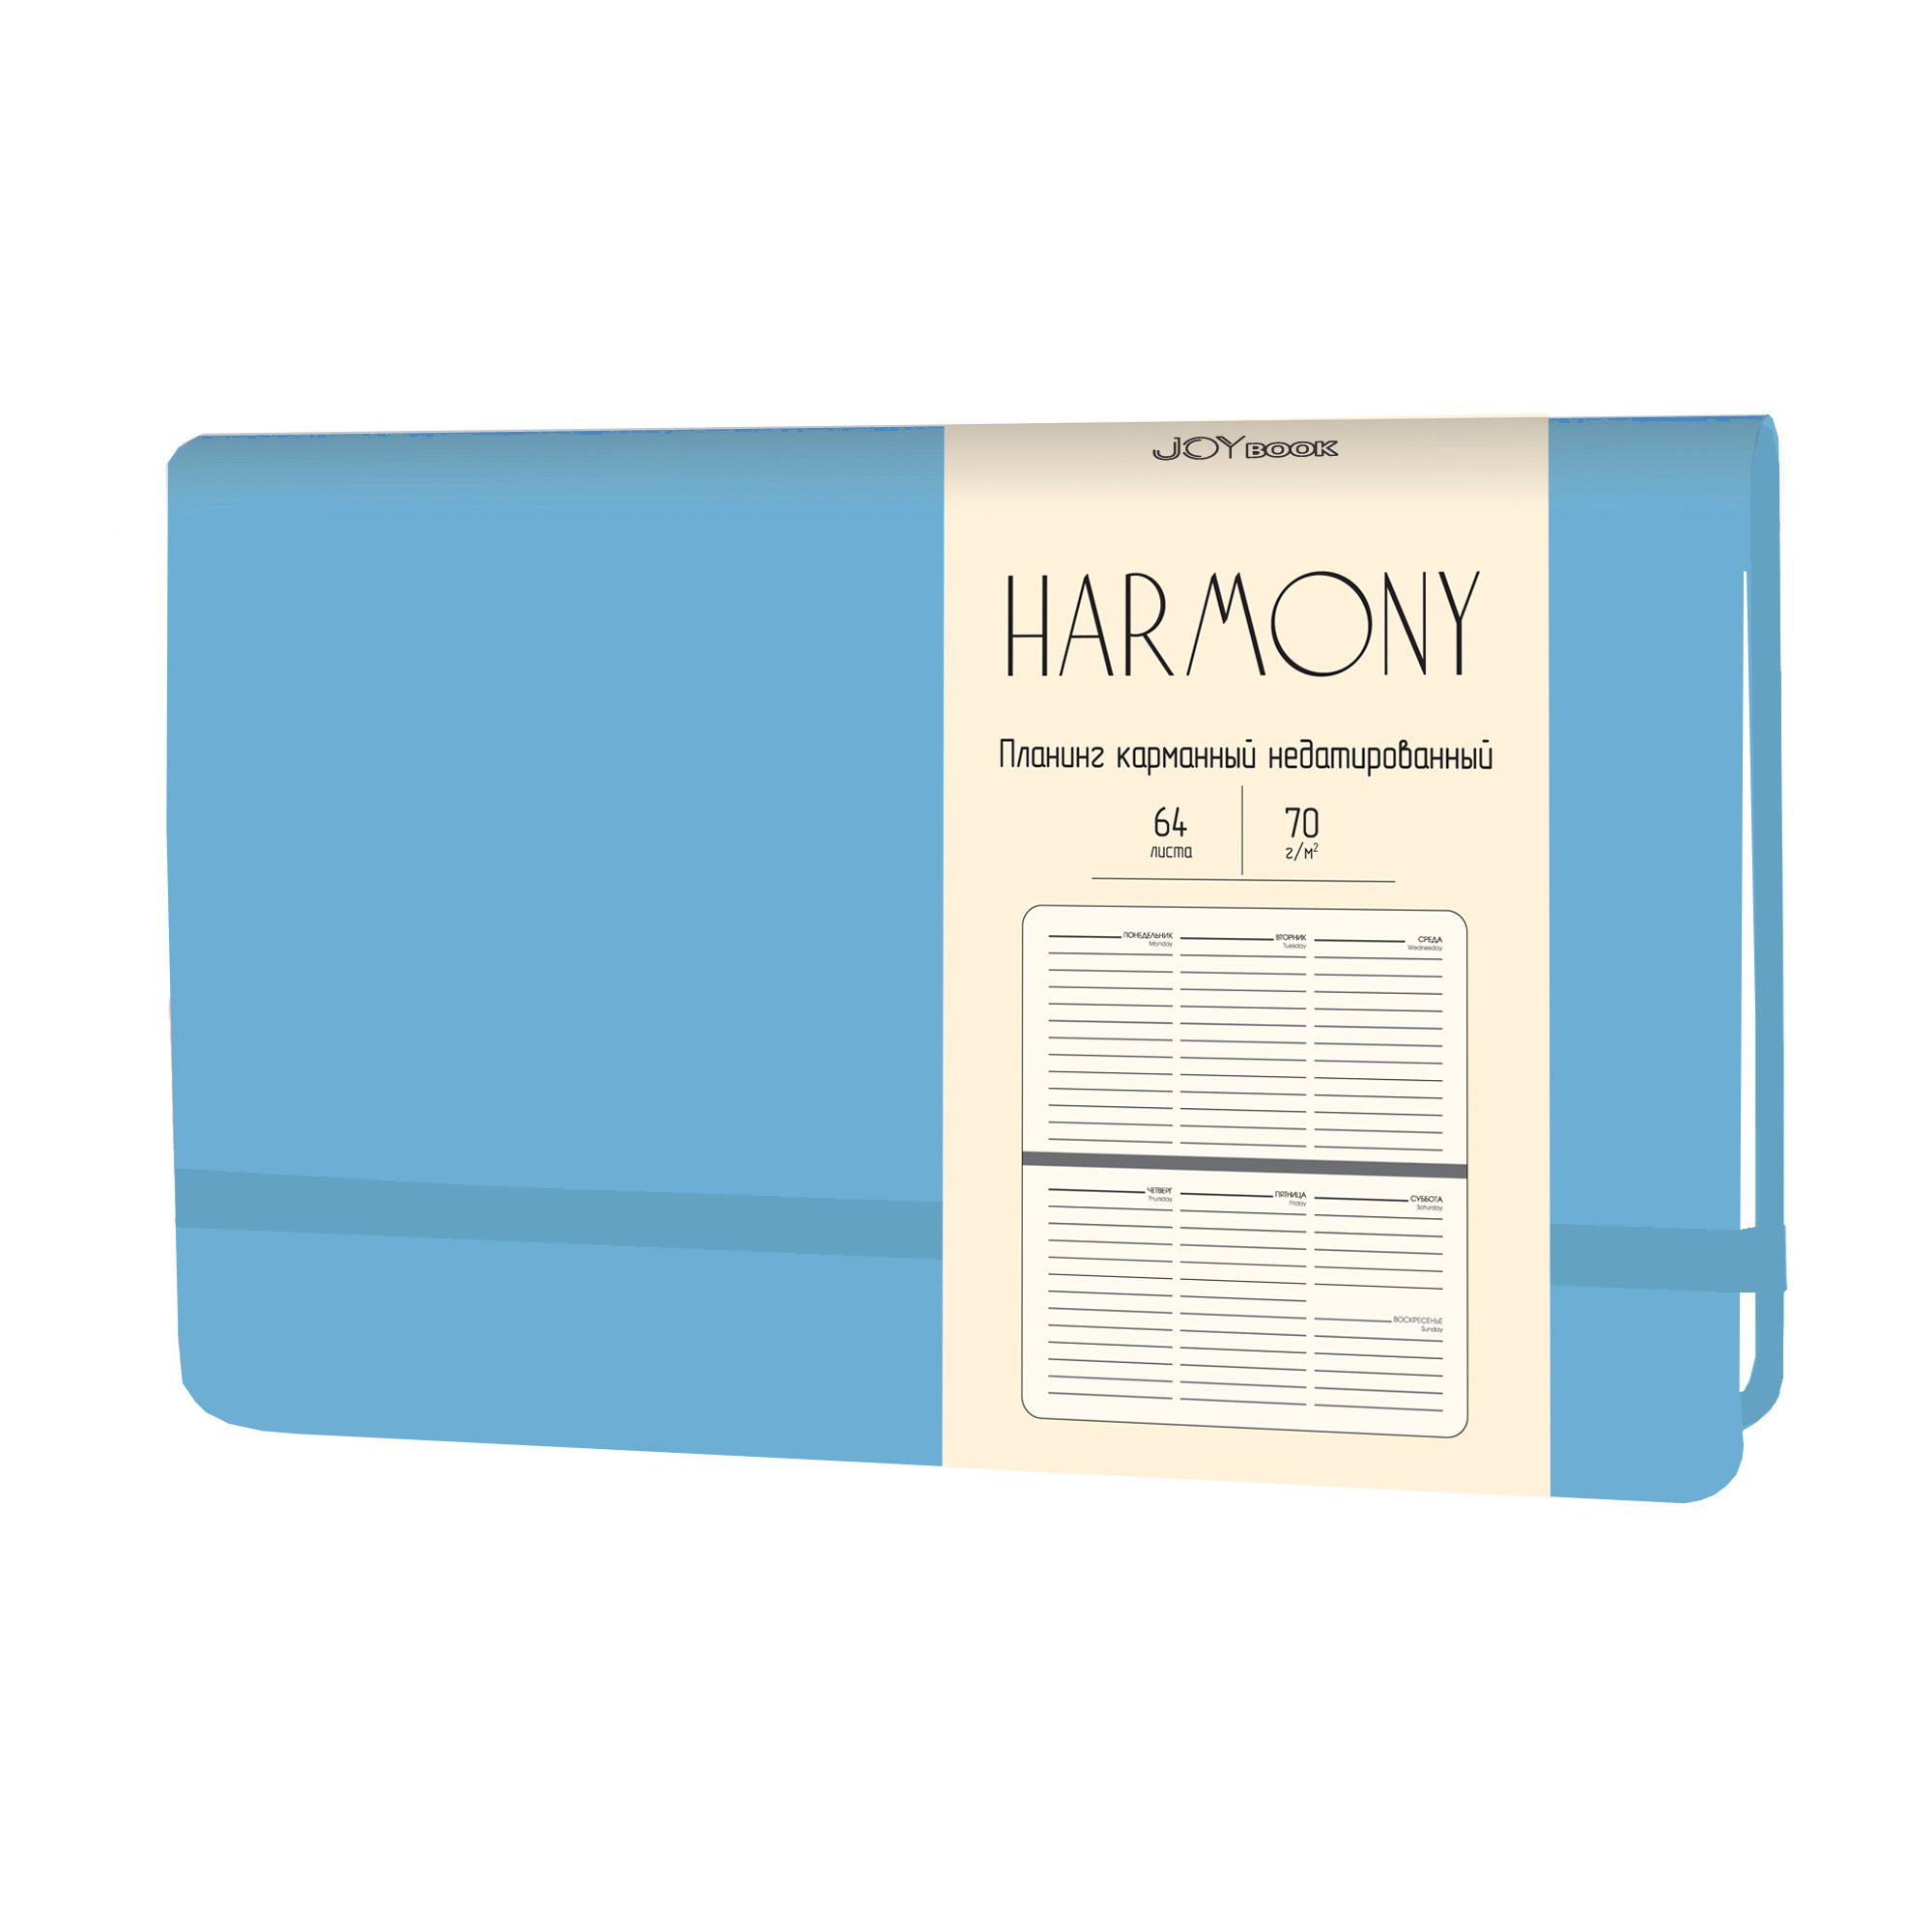 Планинг карманный Harmony недатированный, 64 листа, голубой